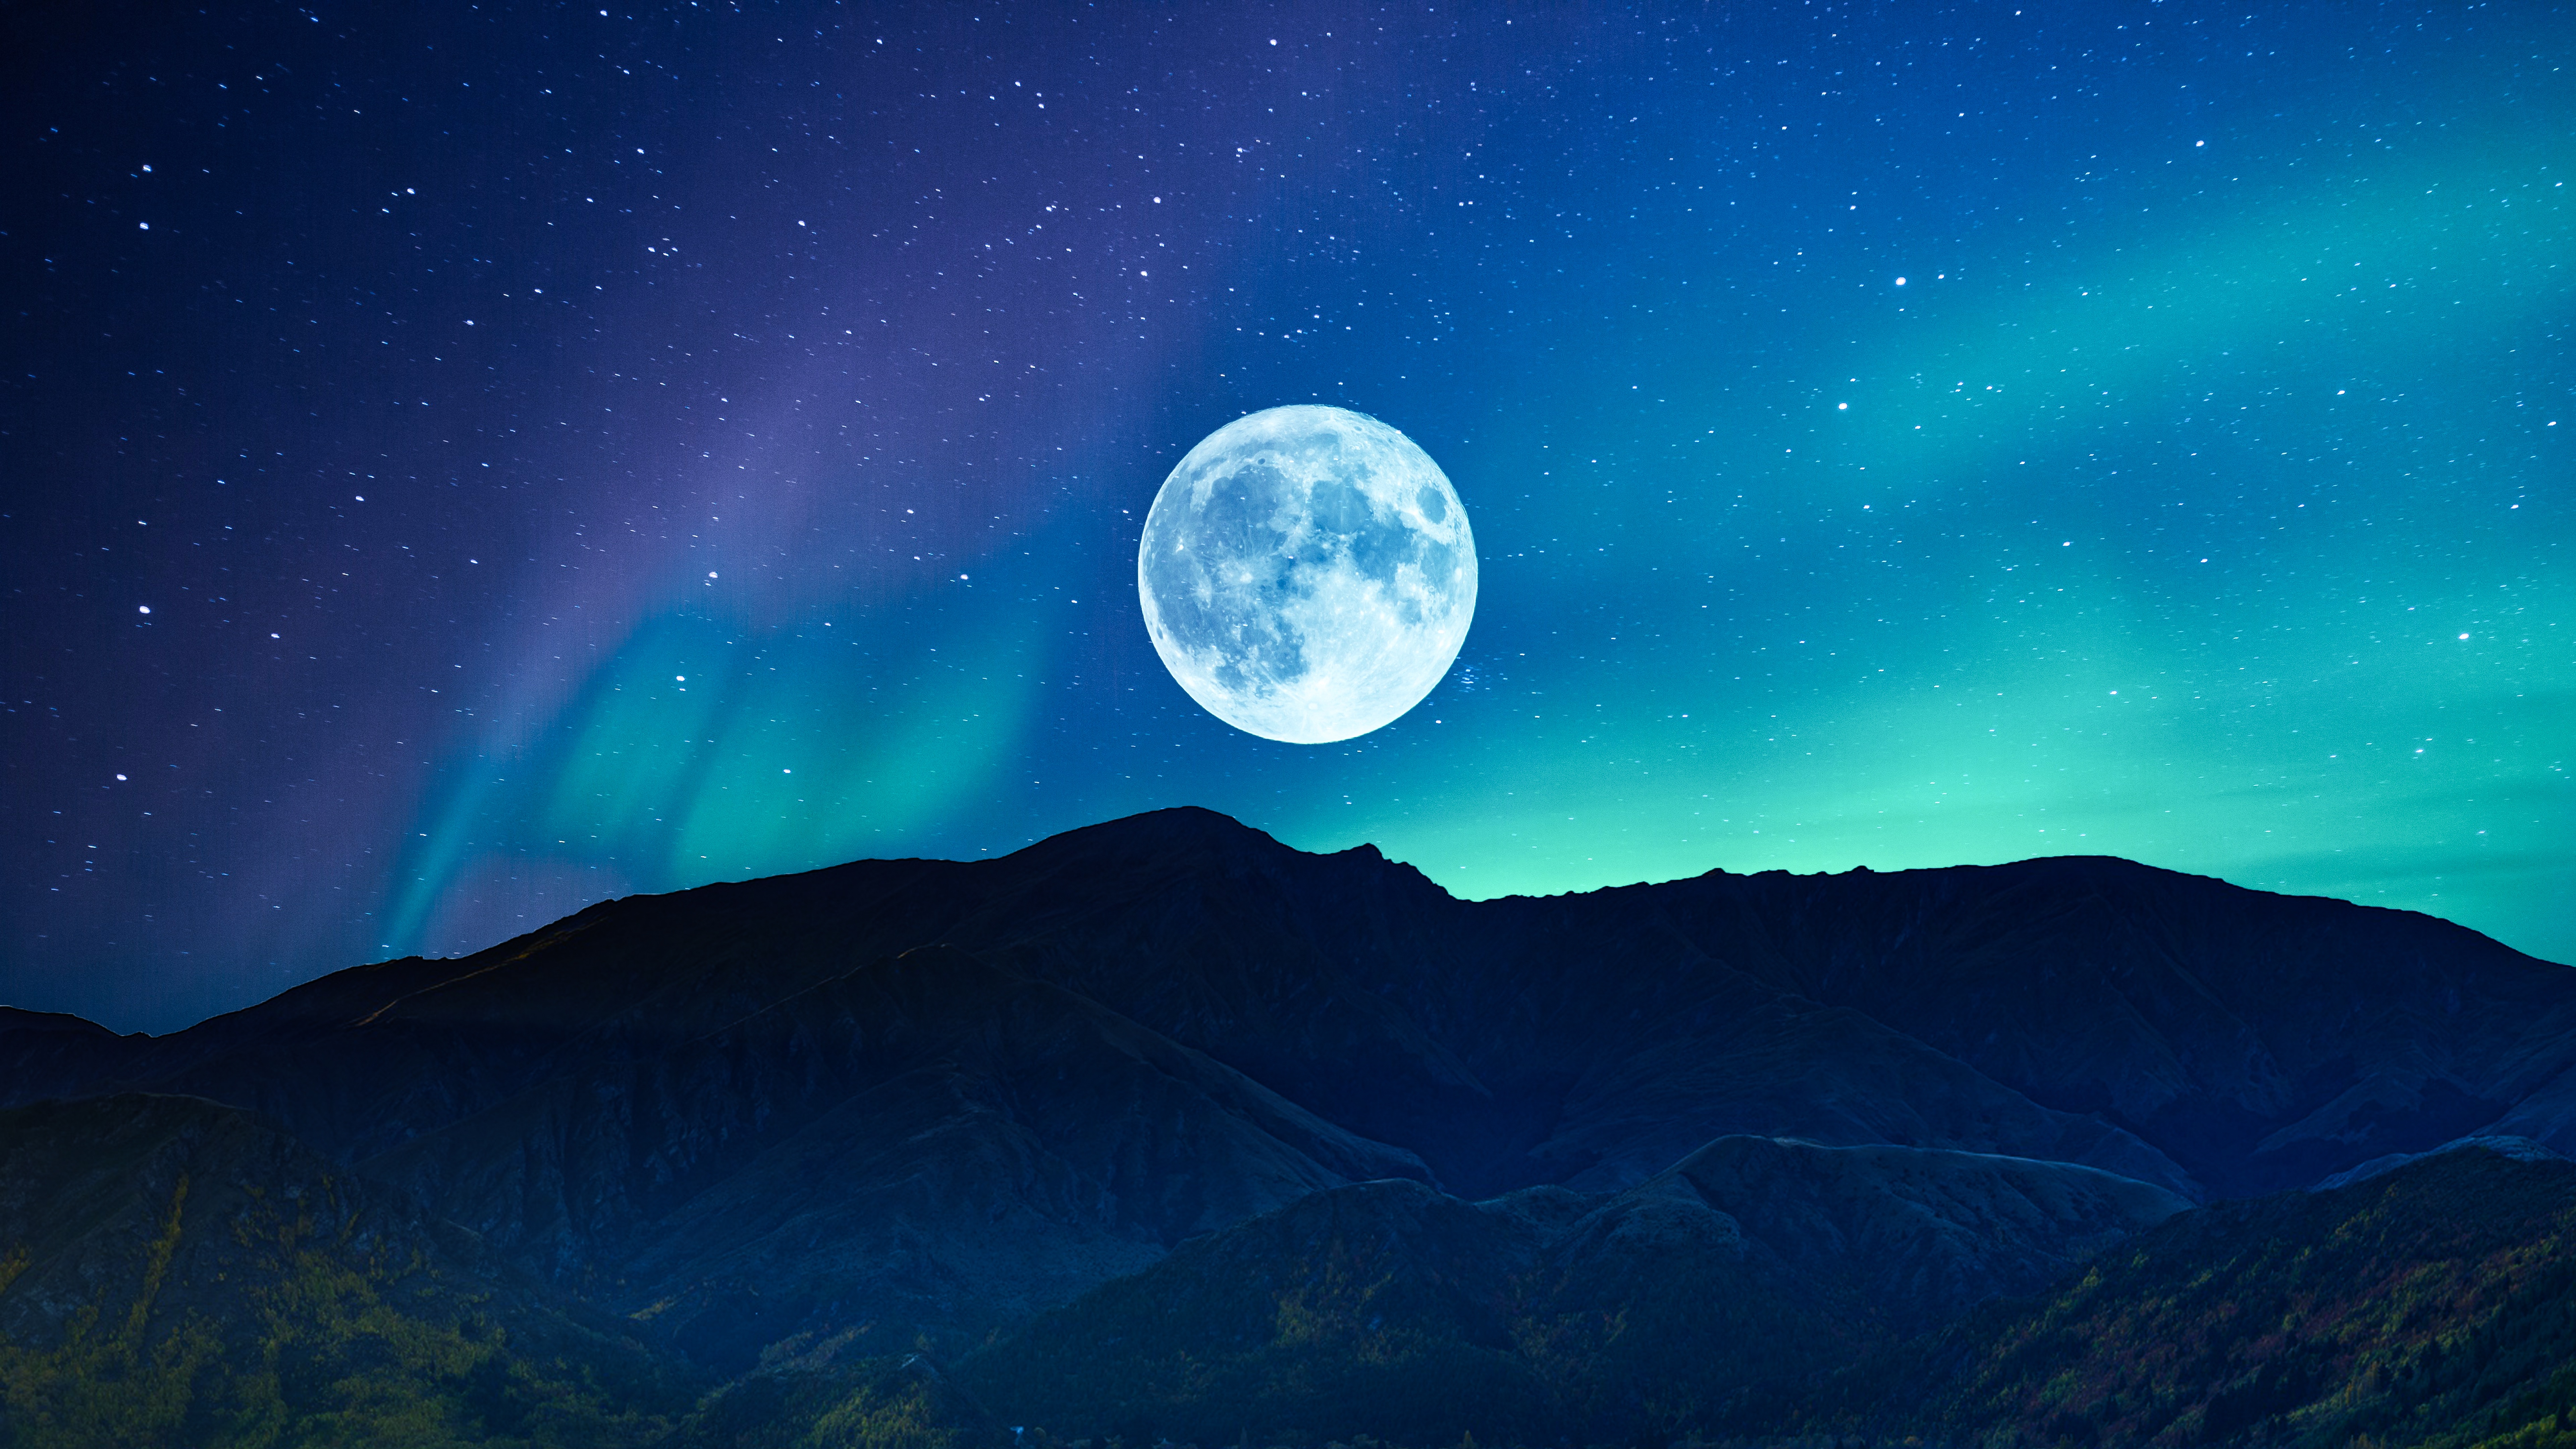 HD wallpaper, 8K, Starry Sky, Surreal, Silhouette, Mountain, 5K, Full Moon, Natural Phenomena, Aurora Borealis, Night Time, Scenery, Landscape